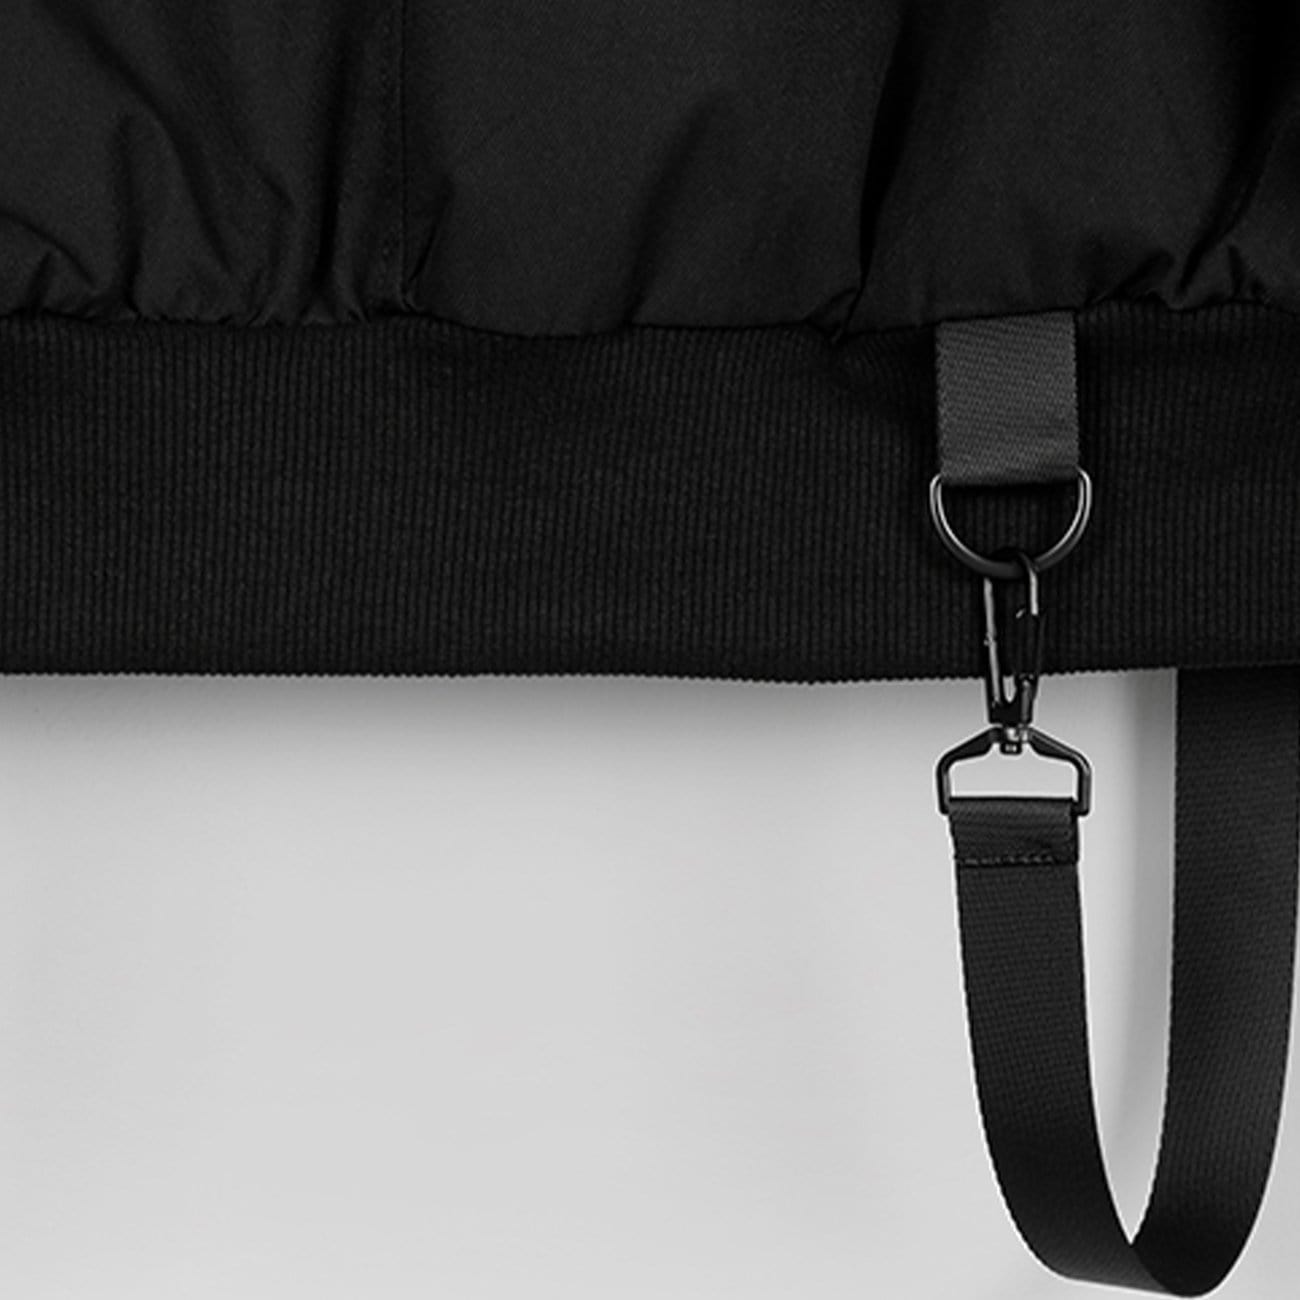 Ninja Cargo Ribbons Function Jacket Streetwear Brand Techwear Combat Tactical YUGEN THEORY